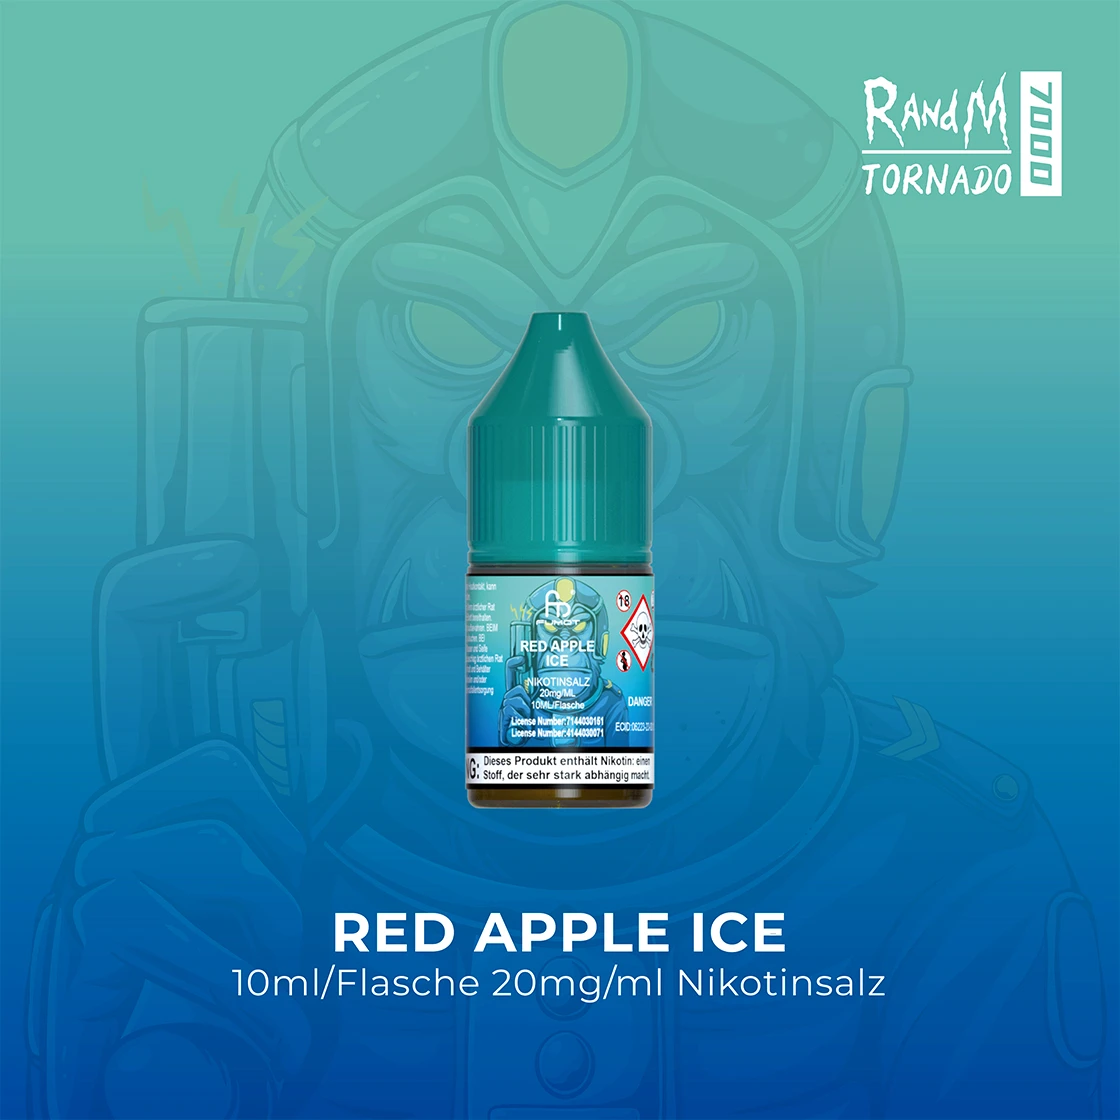 RandM Tornado 7000 Red Apple Ice E-Liquid Nikotinsalz 20 mg | Vape Liquids 1